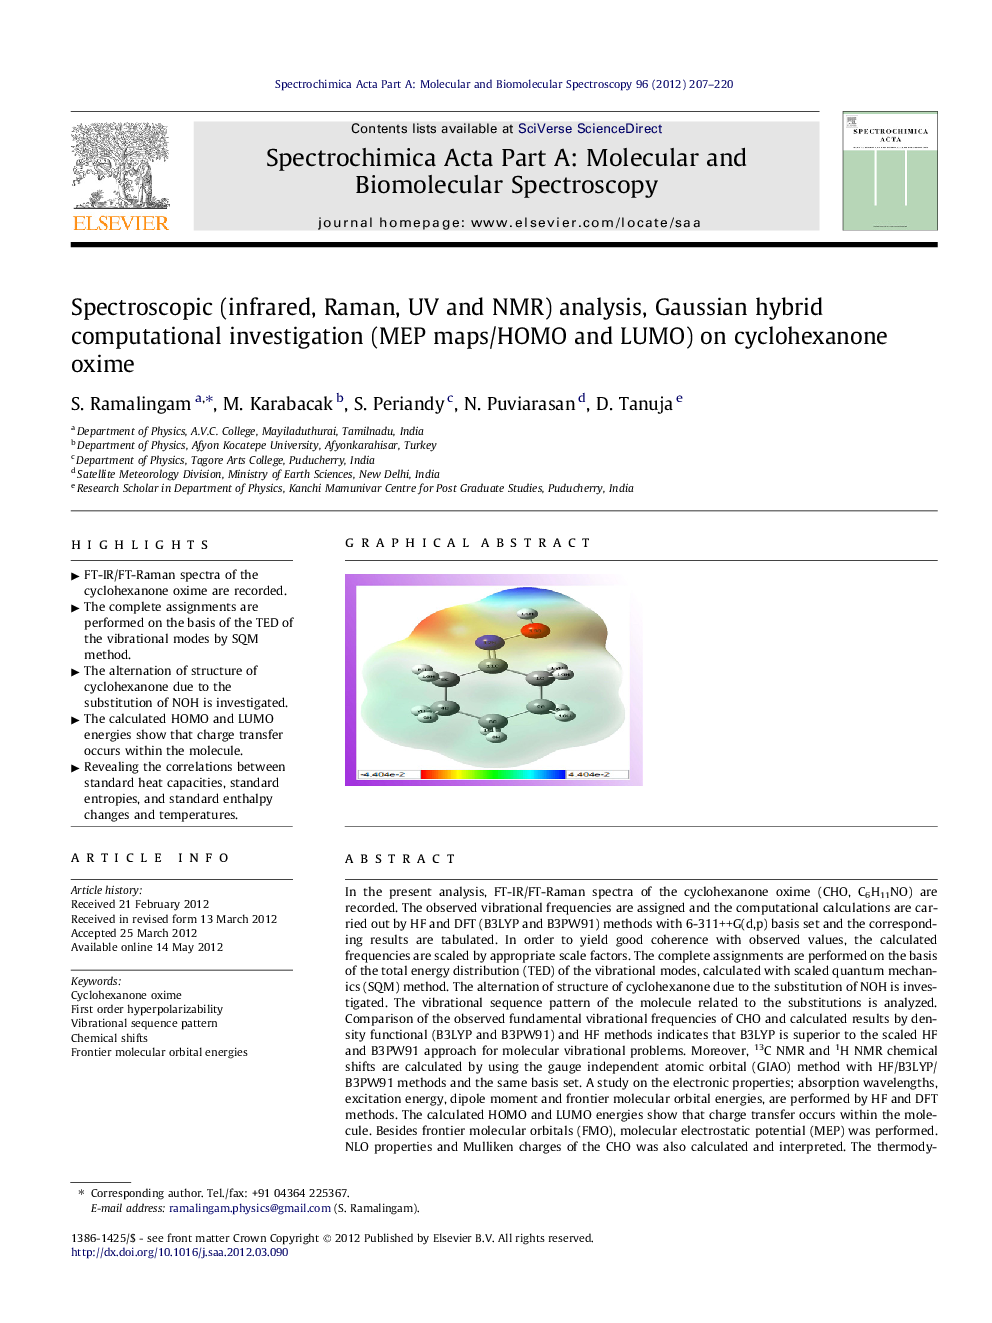 Spectroscopic (infrared, Raman, UV and NMR) analysis, Gaussian hybrid computational investigation (MEP maps/HOMO and LUMO) on cyclohexanone oxime